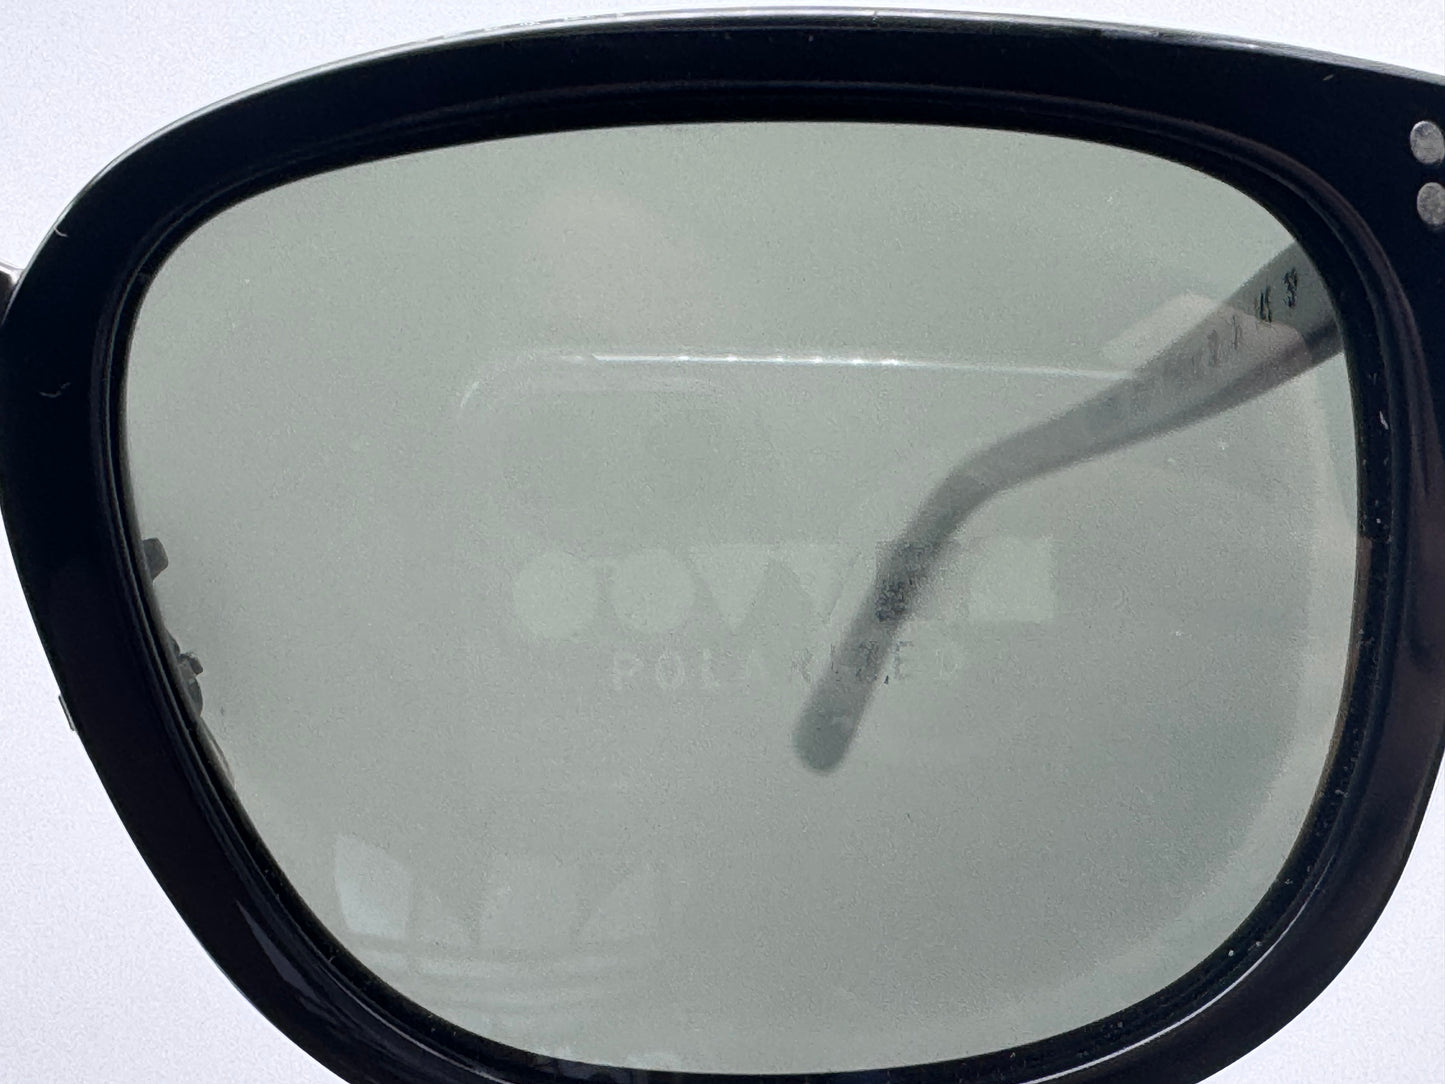 Oliver Peoples Kettner 52mm Black G 15 Polarized lens OV 5339 s 1005P1 Preowned